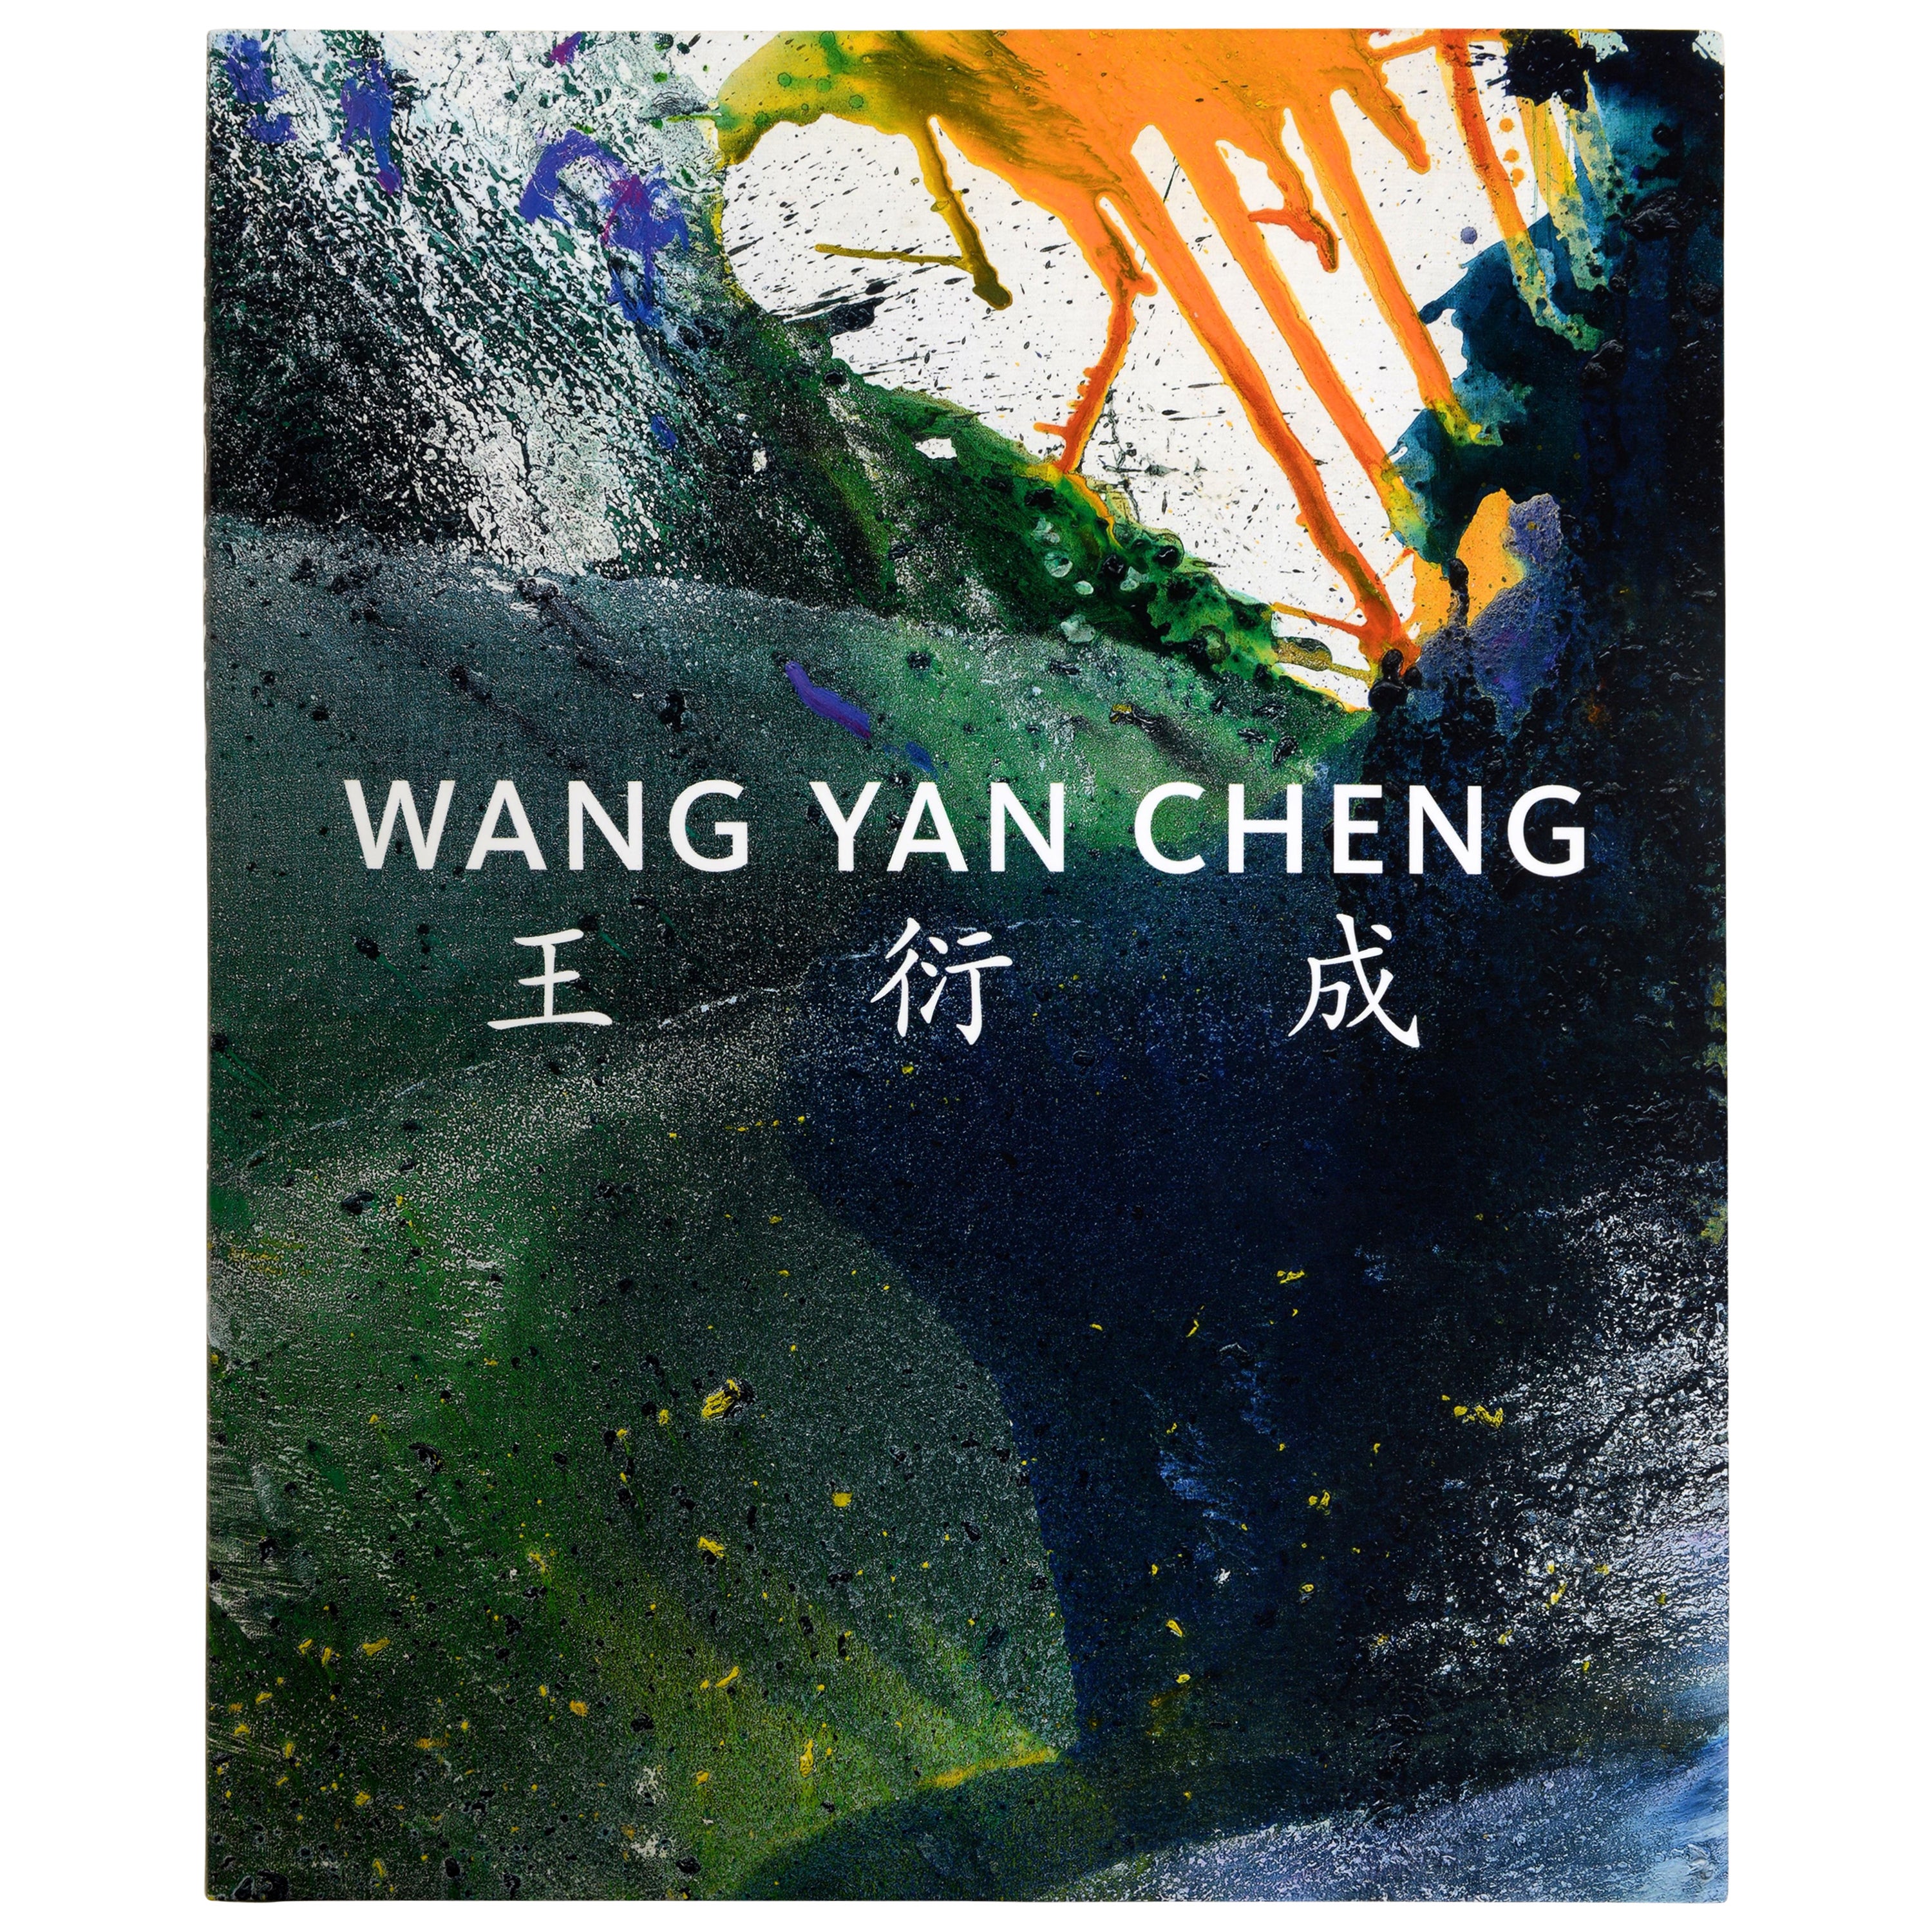 Wang Yan Cheng von Wang Yan Cheng, 1st Ed Exhibition Catalog